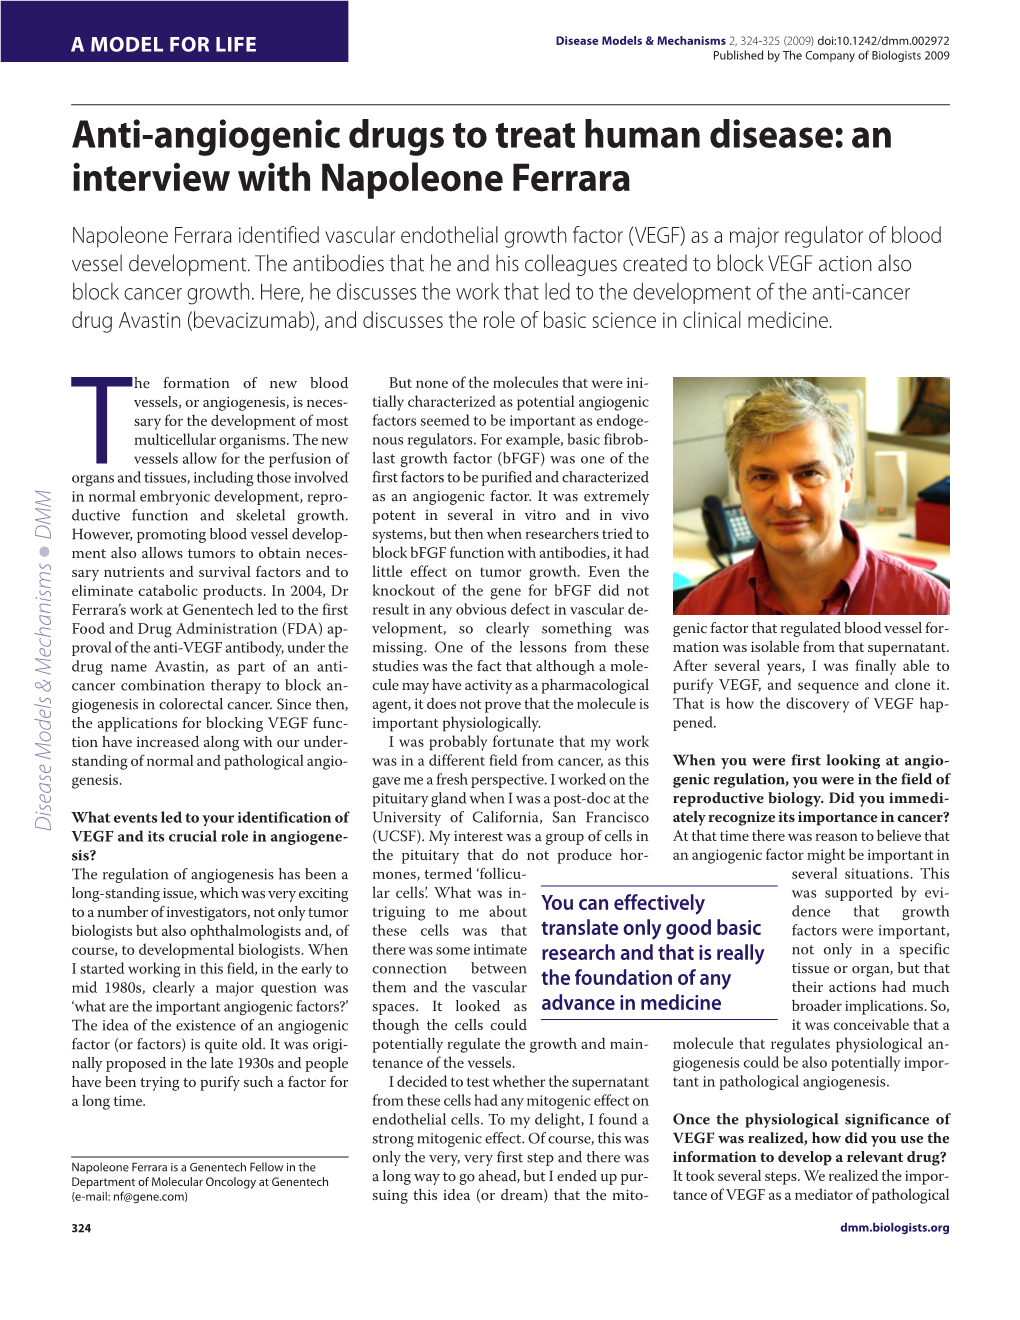 Anti-Angiogenic Drugs to Treat Human Disease: an Interview with Napoleone Ferrara